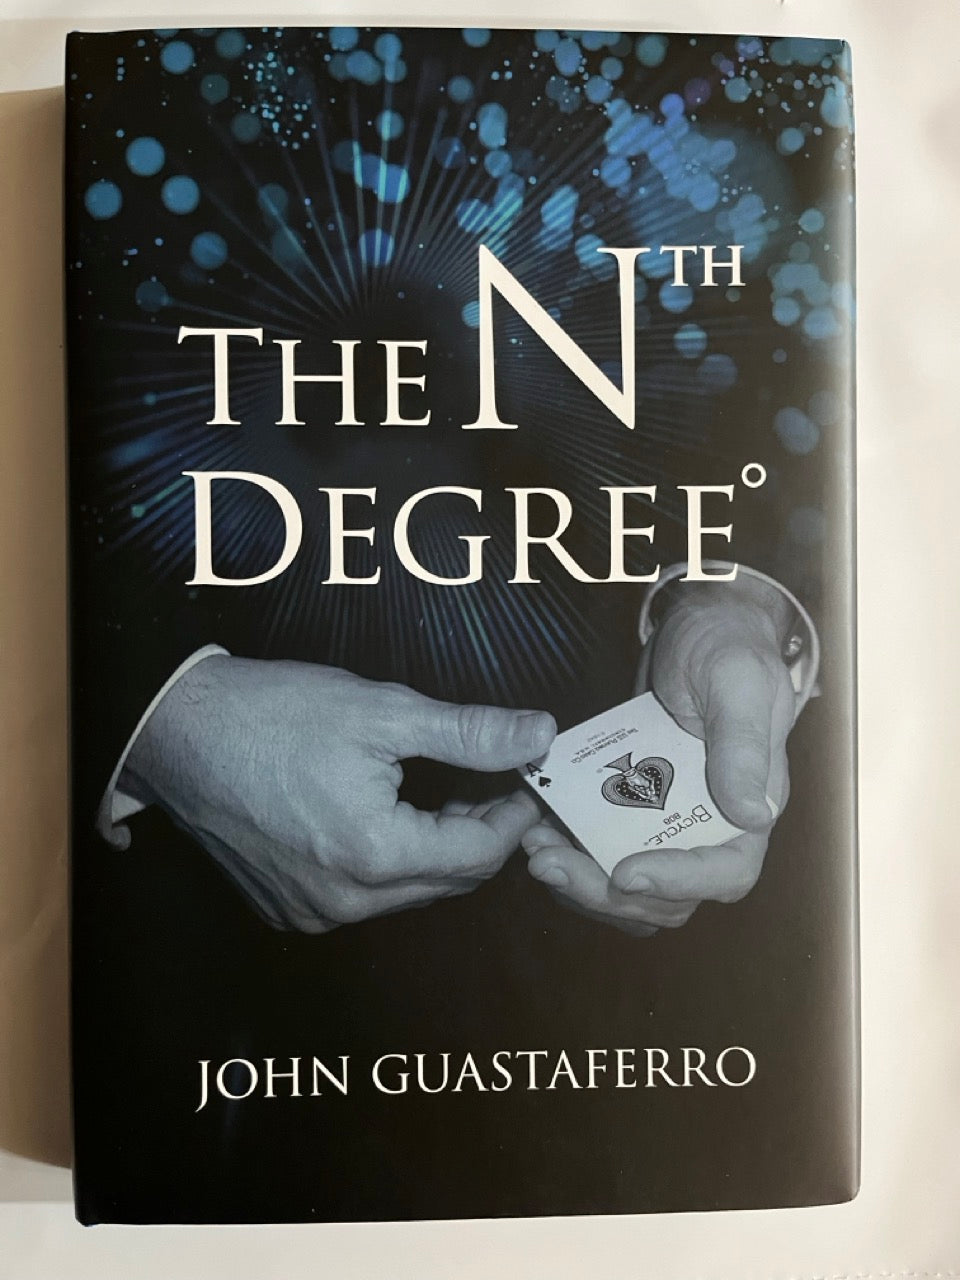 The Nth Degree - John Guastaferro